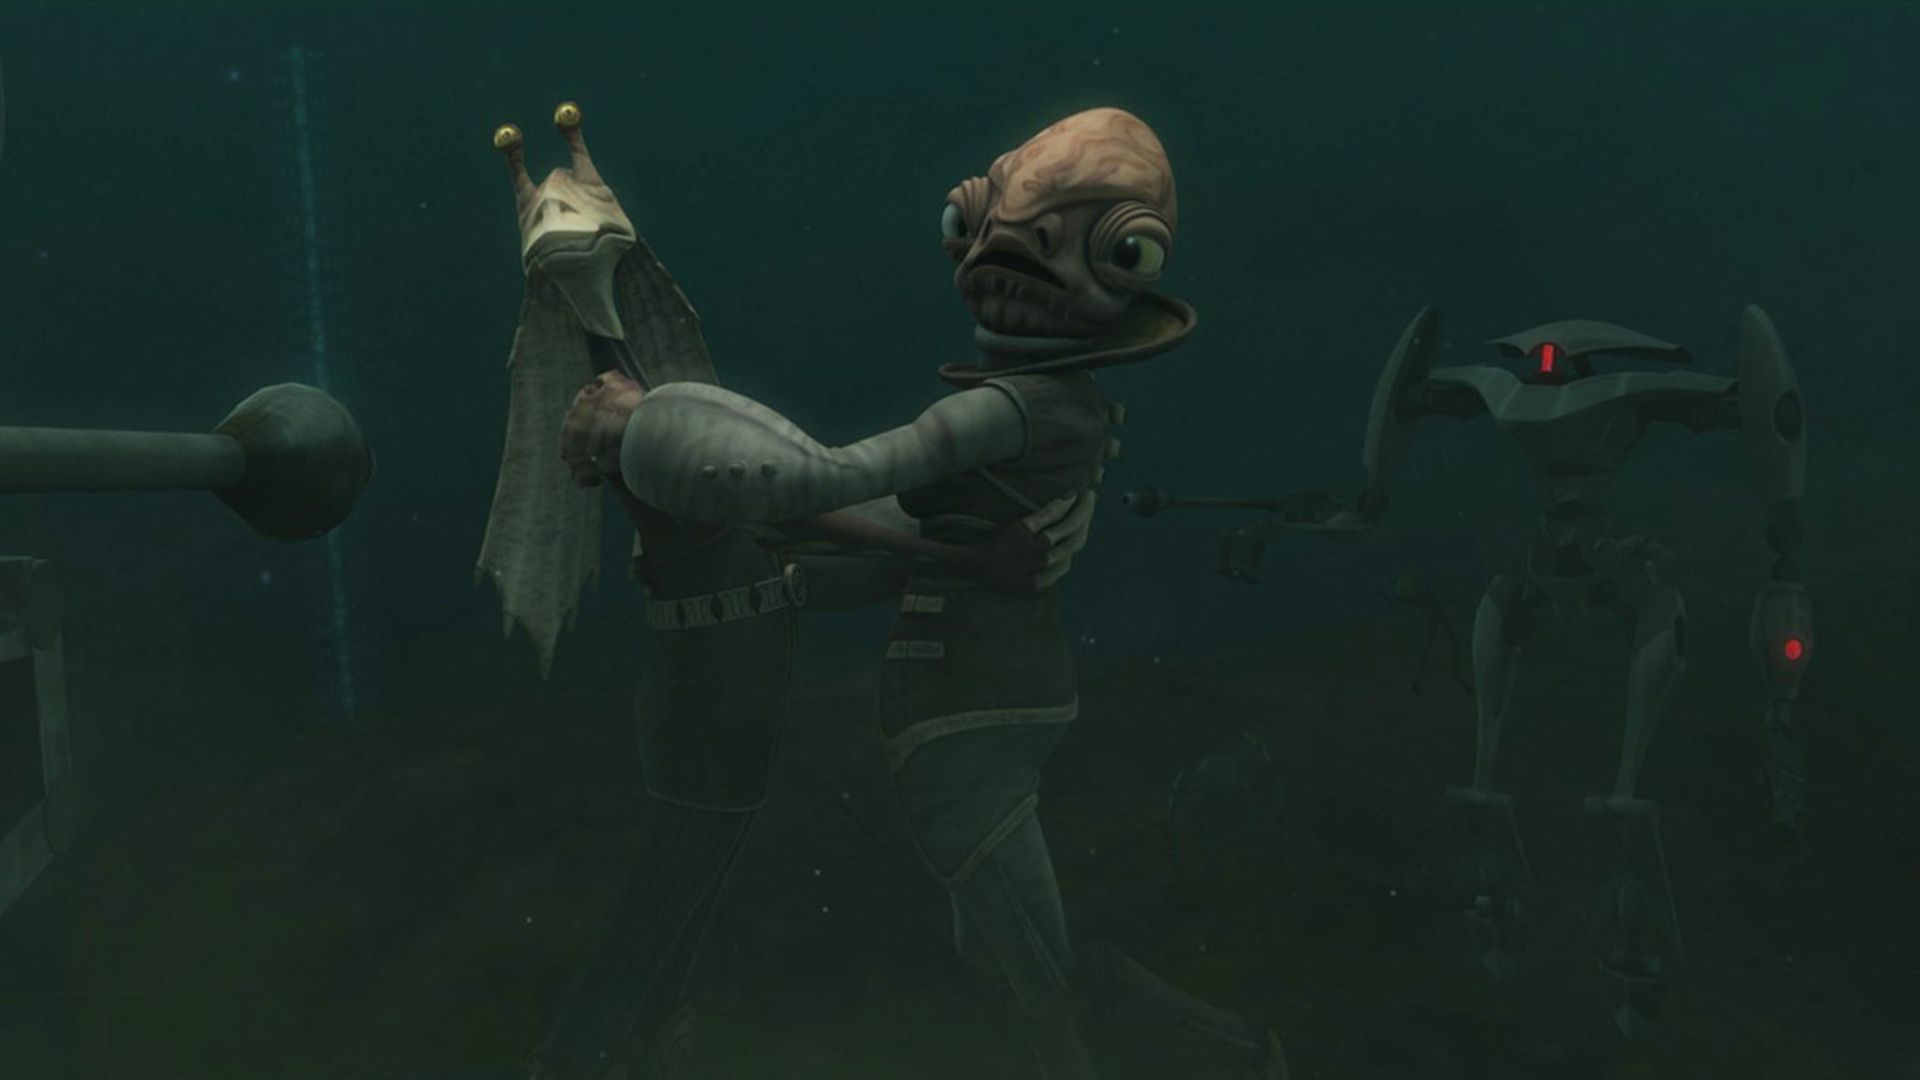 Gungan underwater grappling a creature